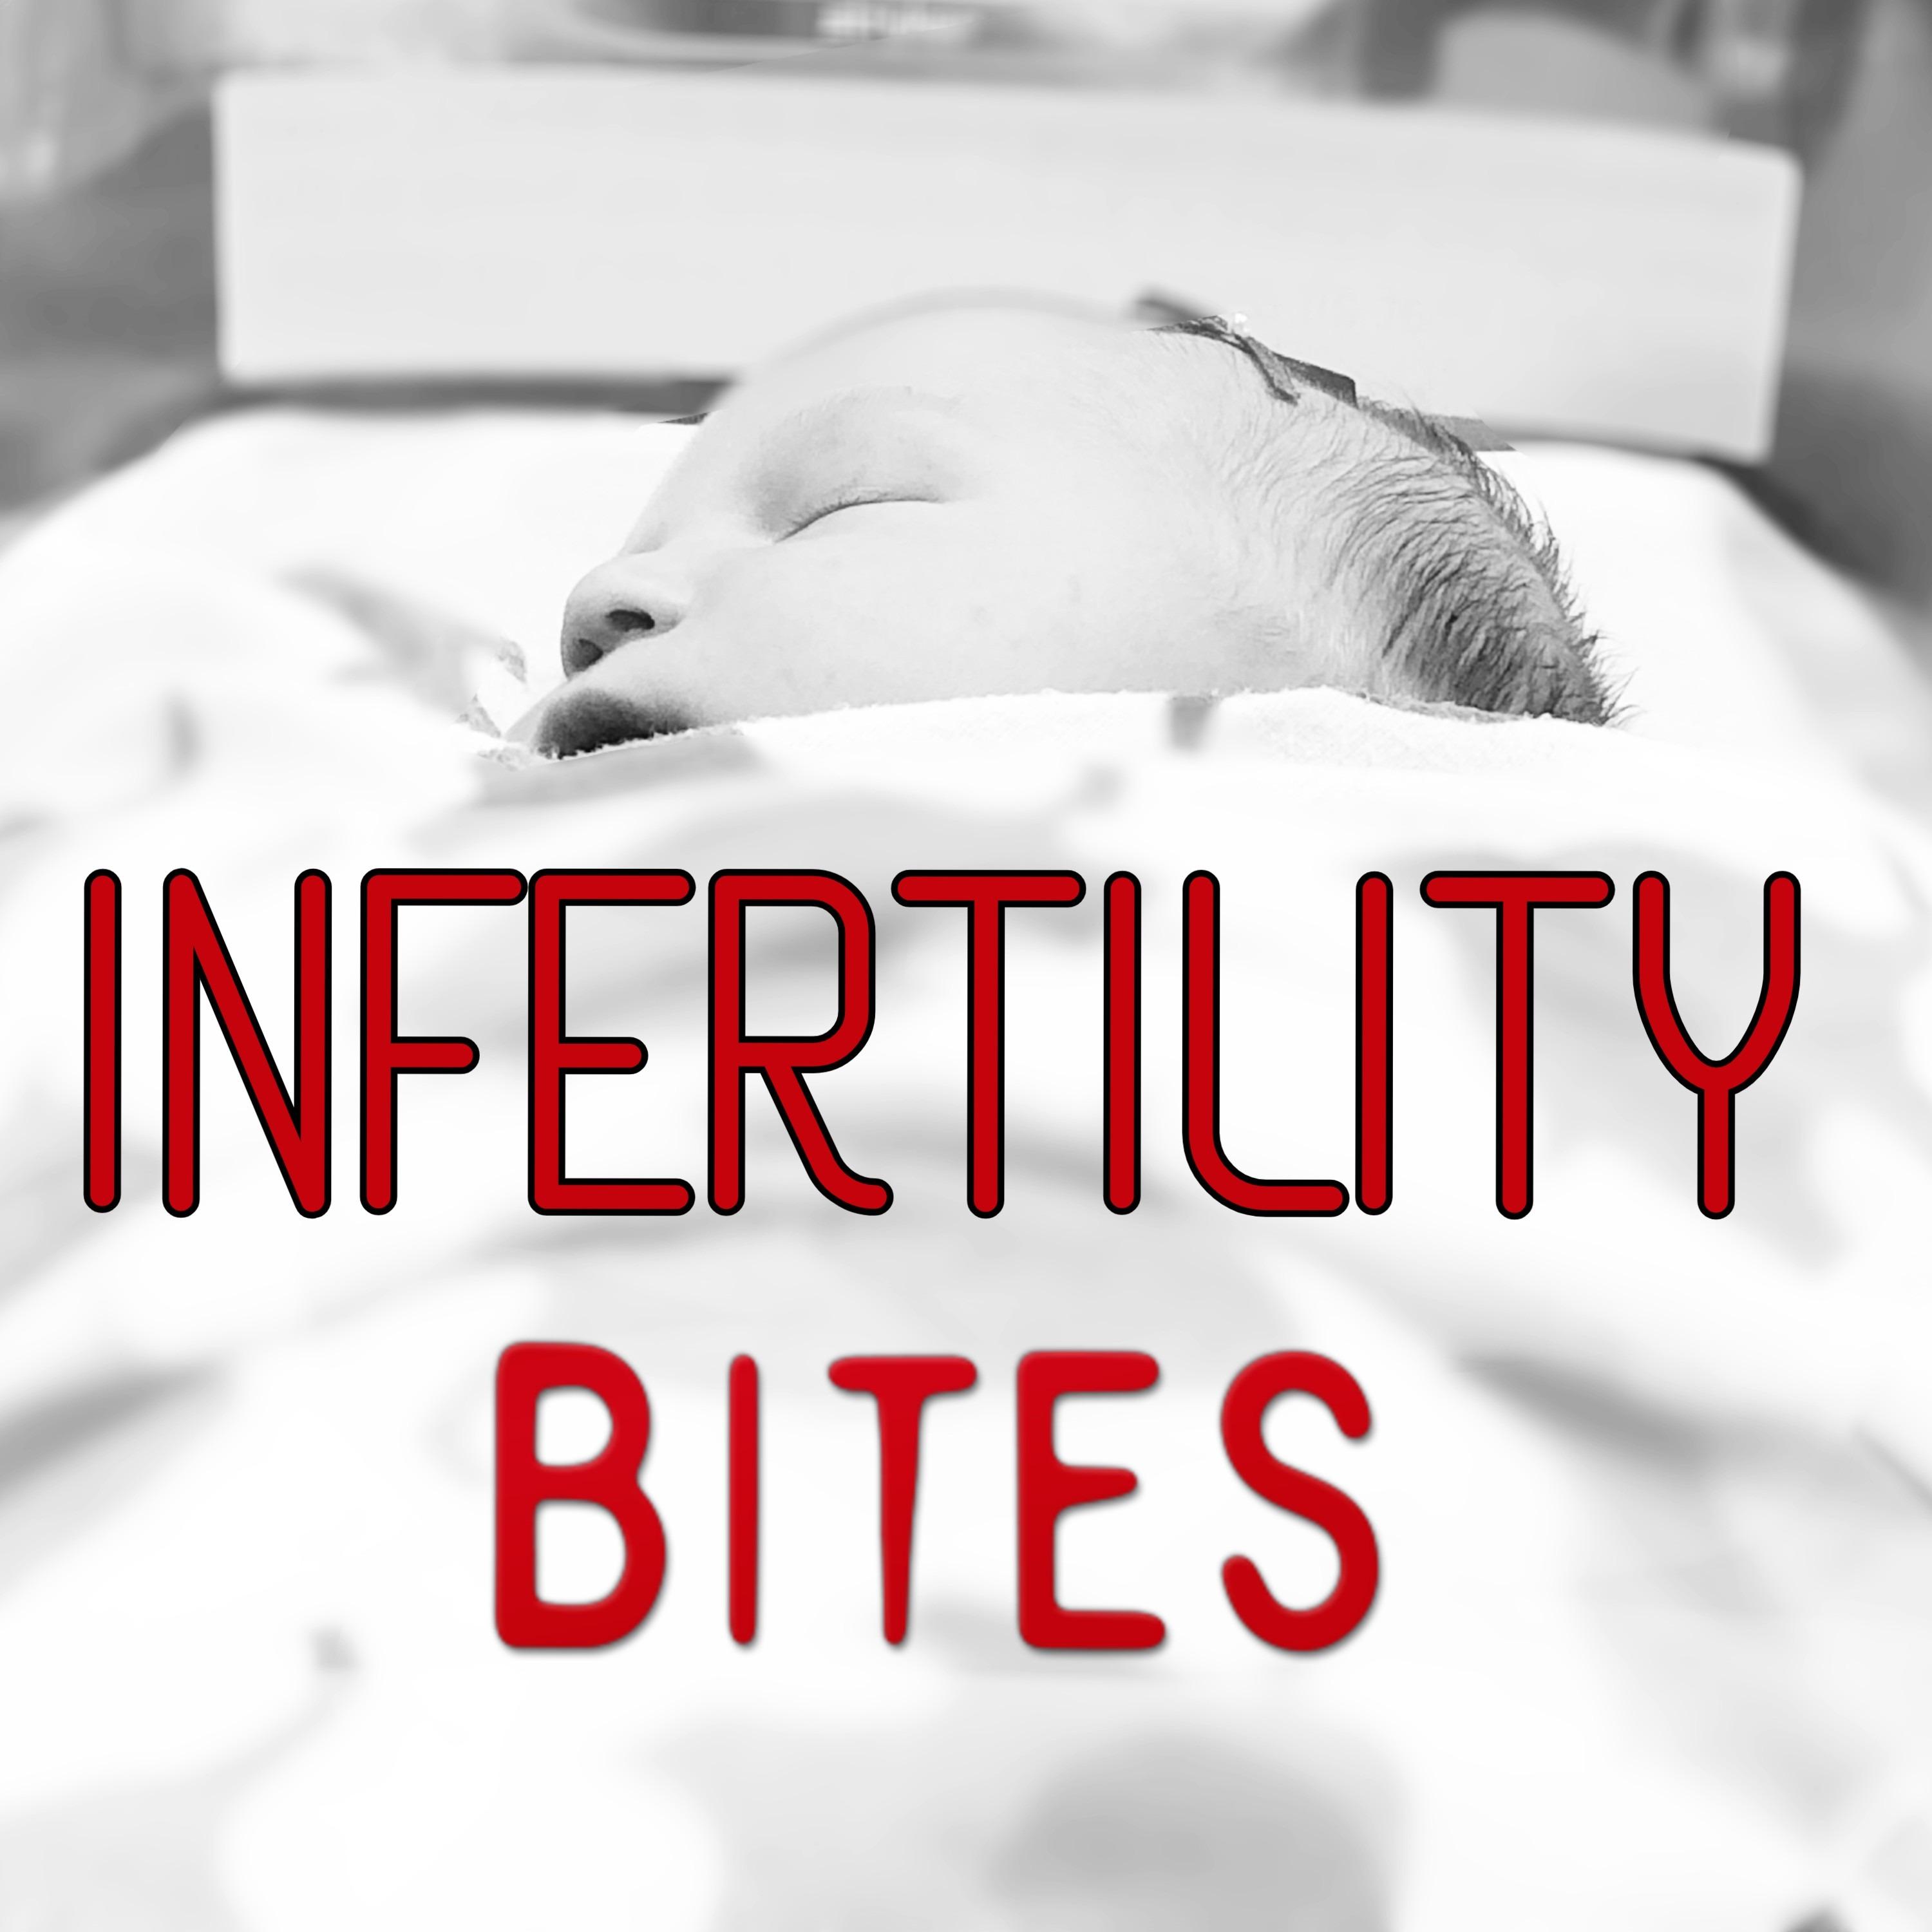 Infertility Bites